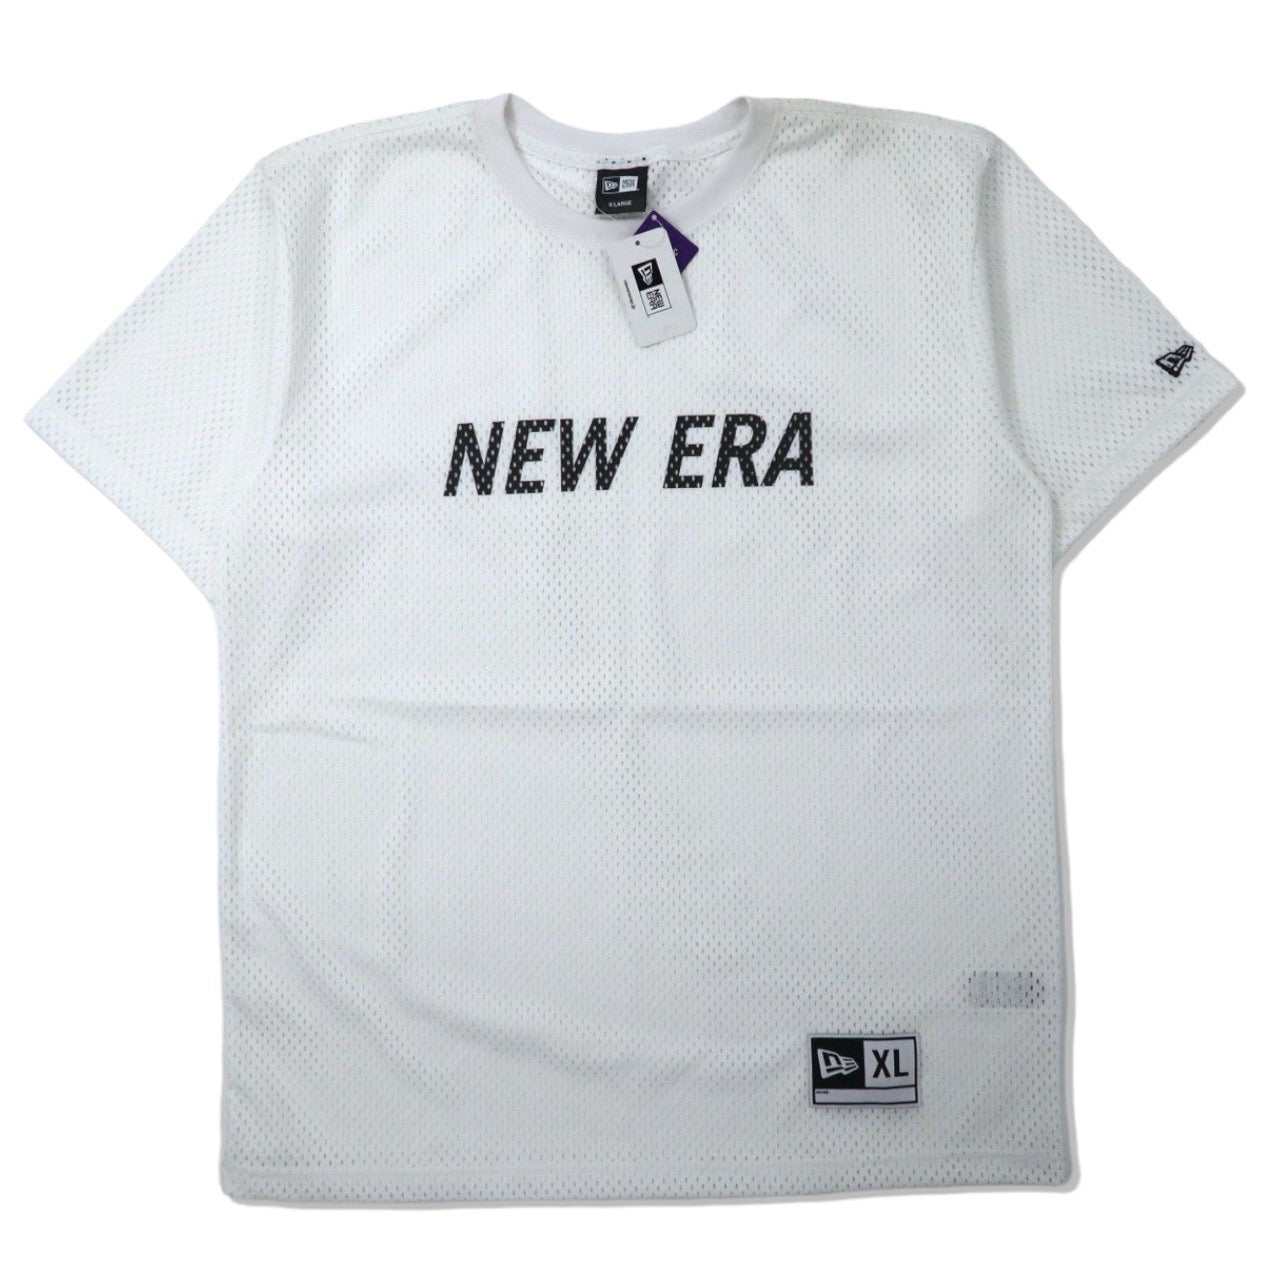 NEWERA ビッグサイズ メッシュTシャツ XL ホワイト ポリエステル SS MESH TEE 未使用品 – 日本然リトテ